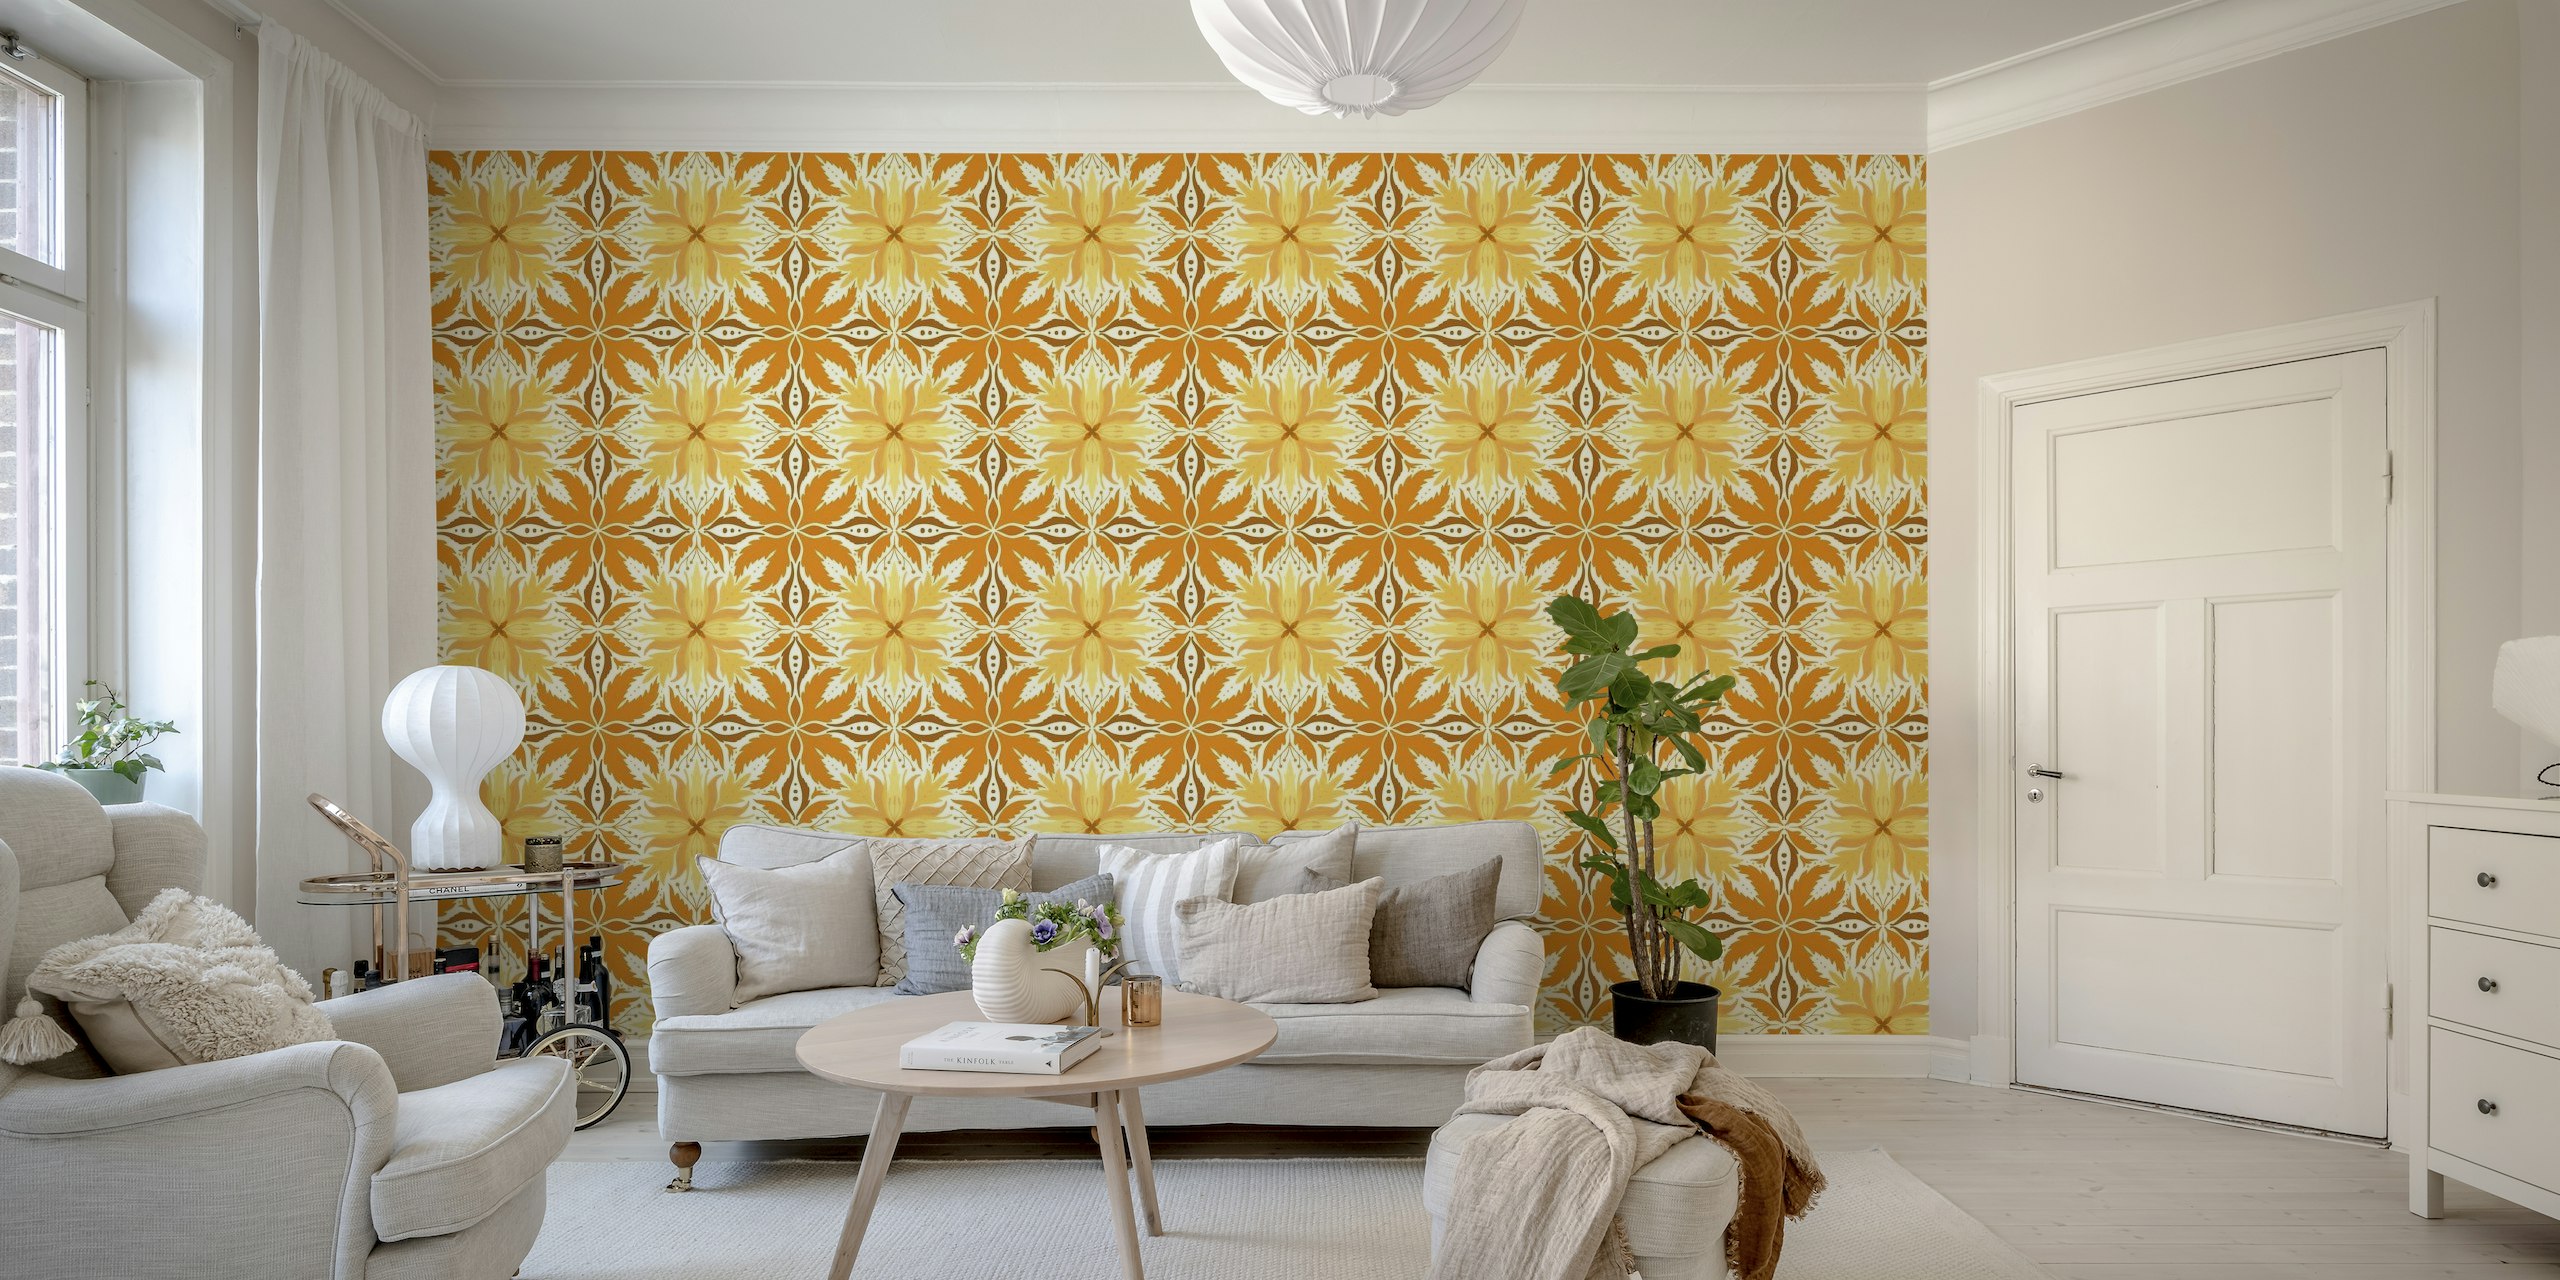 Ornate tiles, yellow and orange behang